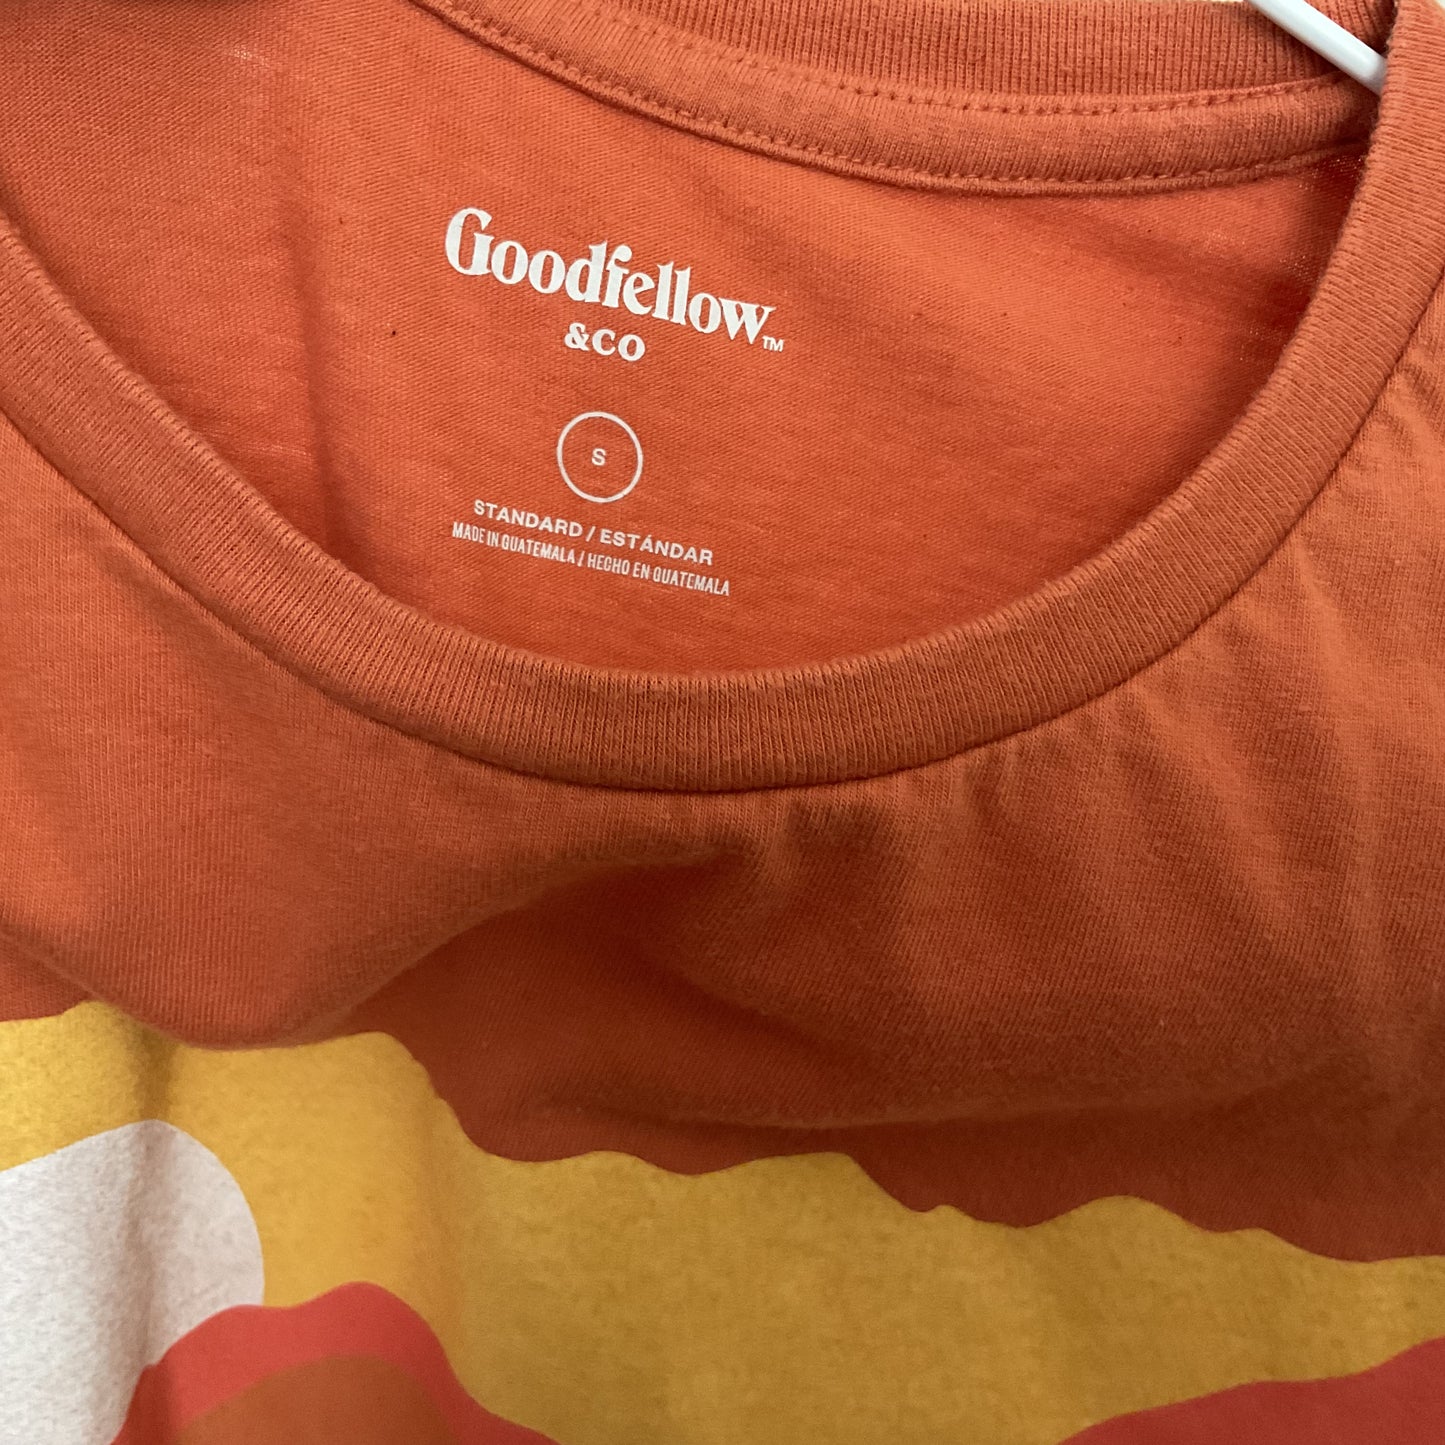 Goodfellow & Co Men’s Graphic T-shirt Size S.